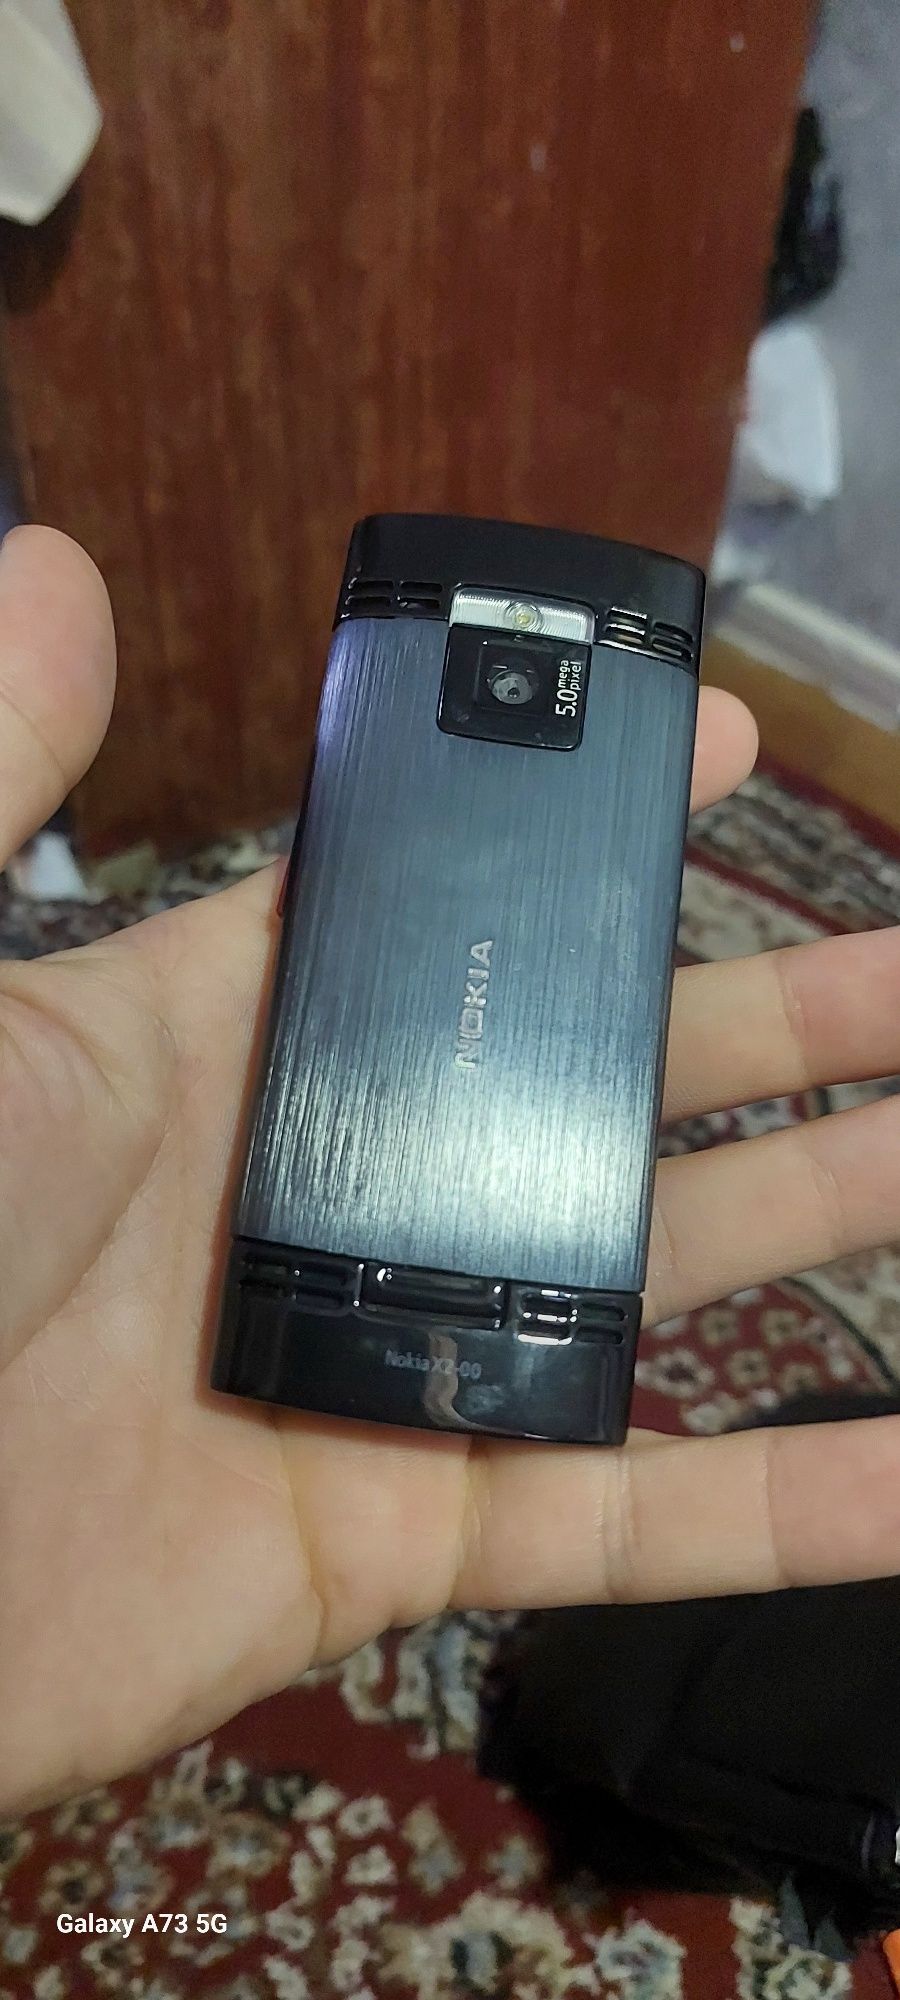 Nokia e51 Nokia 6300 Nokia x2 registratsa bogan